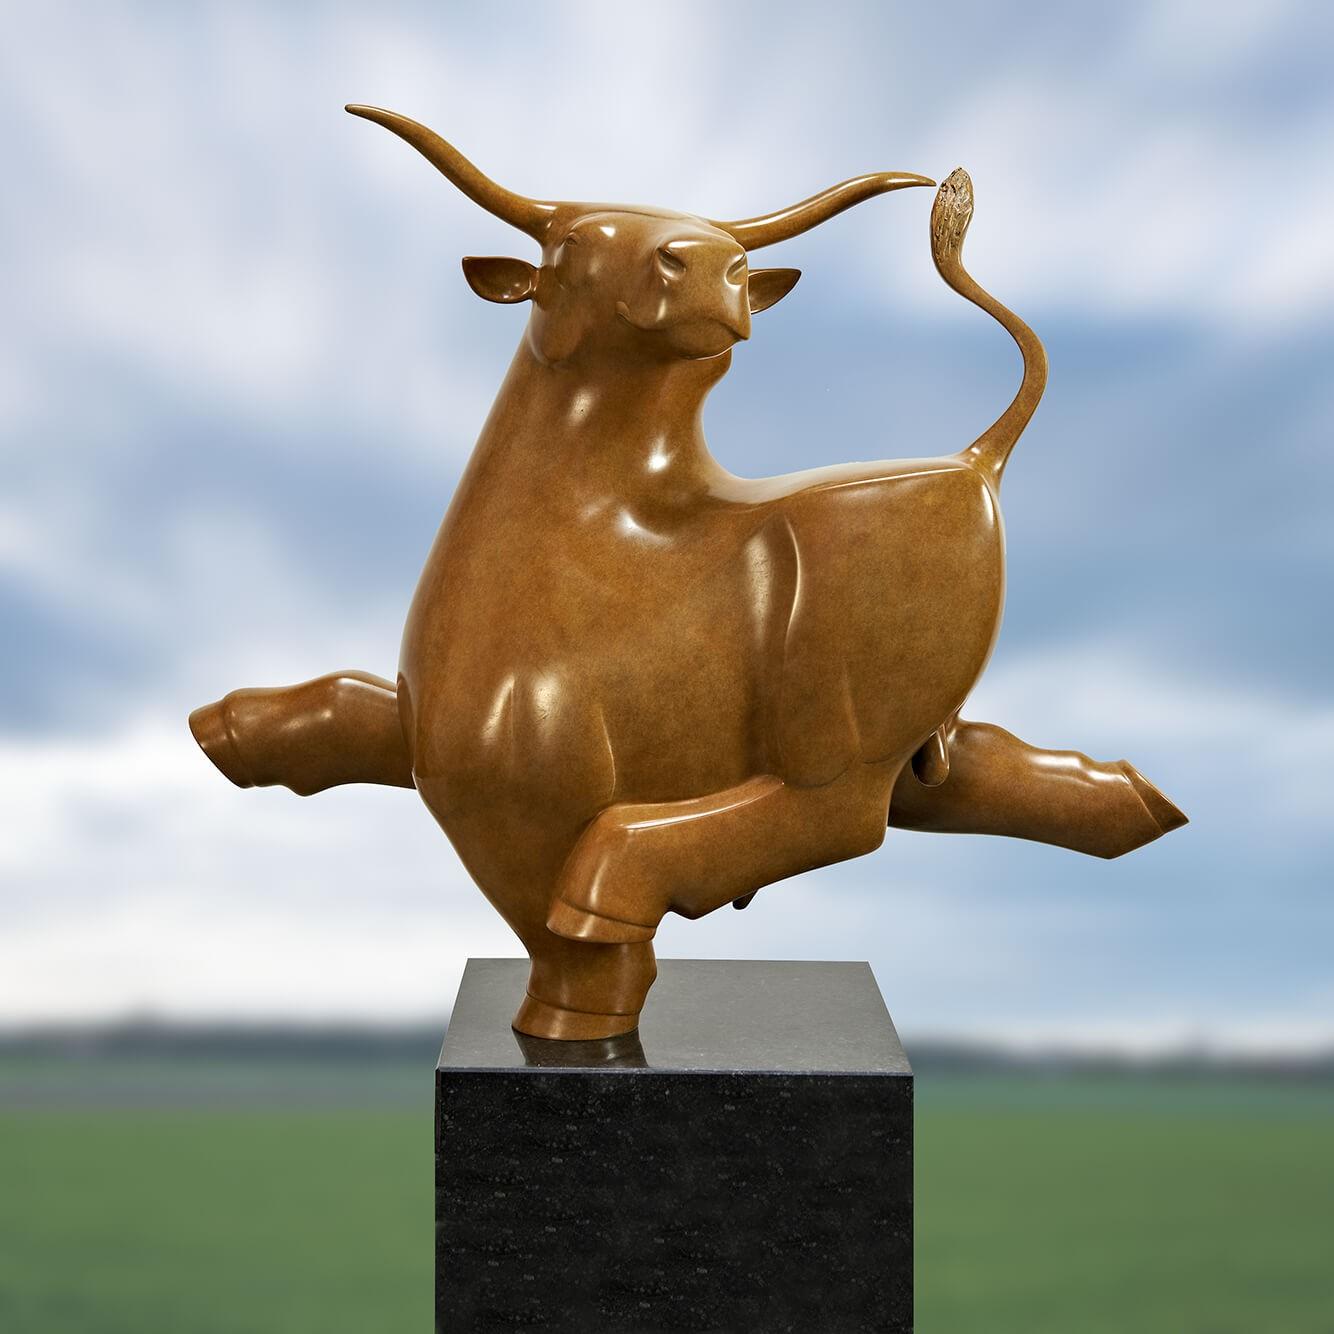 Evert den Hartog Figurative Sculpture - Wandelende Stier no. 3 Groot - Big Walking Bull Bronze Sculpture Animal 